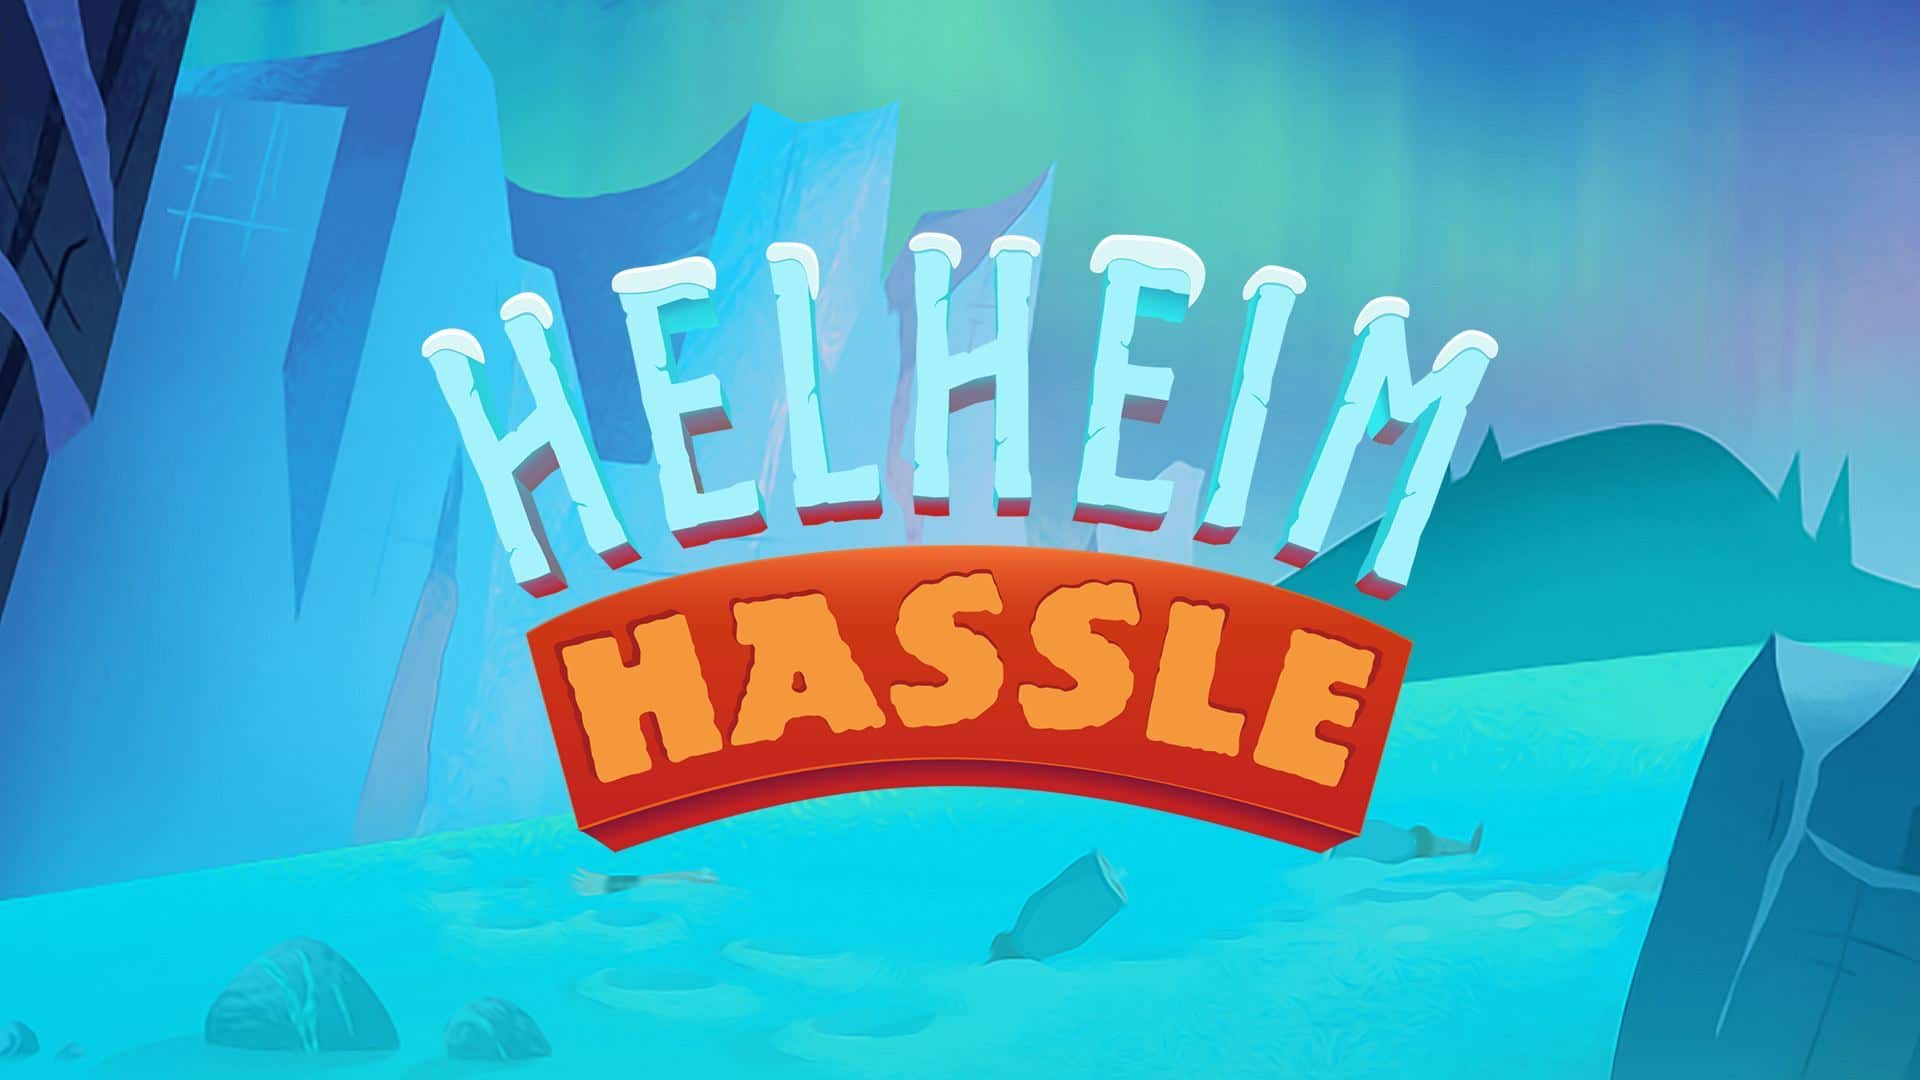 Helheim Hassle: data d'uscita per questo curioso platform